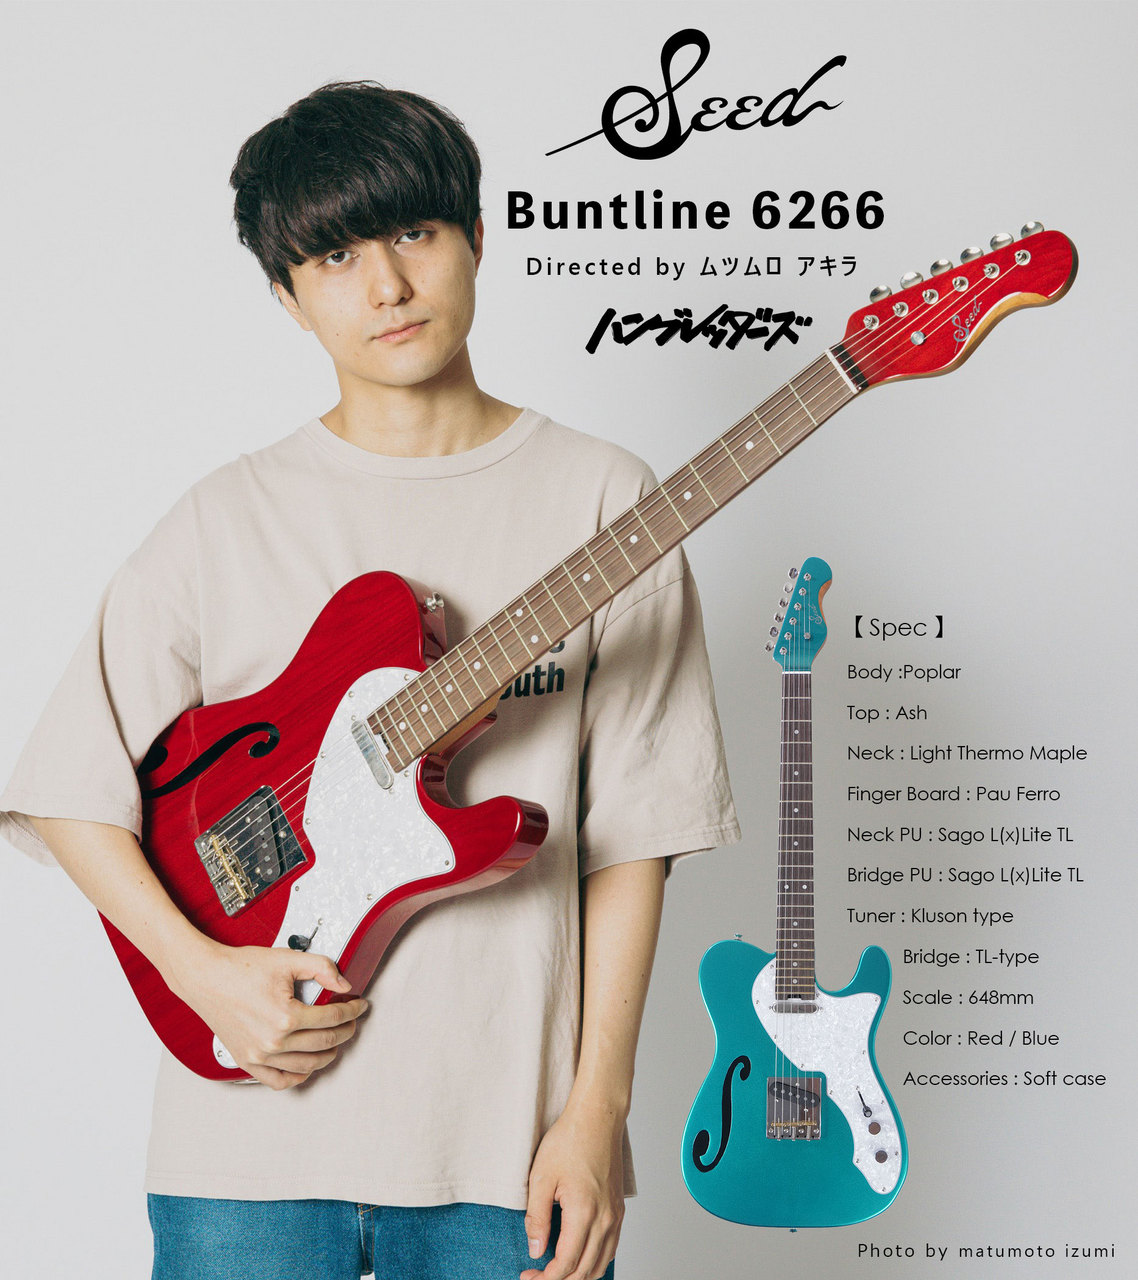 Sago ( Sago New Material Guitars ) Seed Buntline 6266 RED 